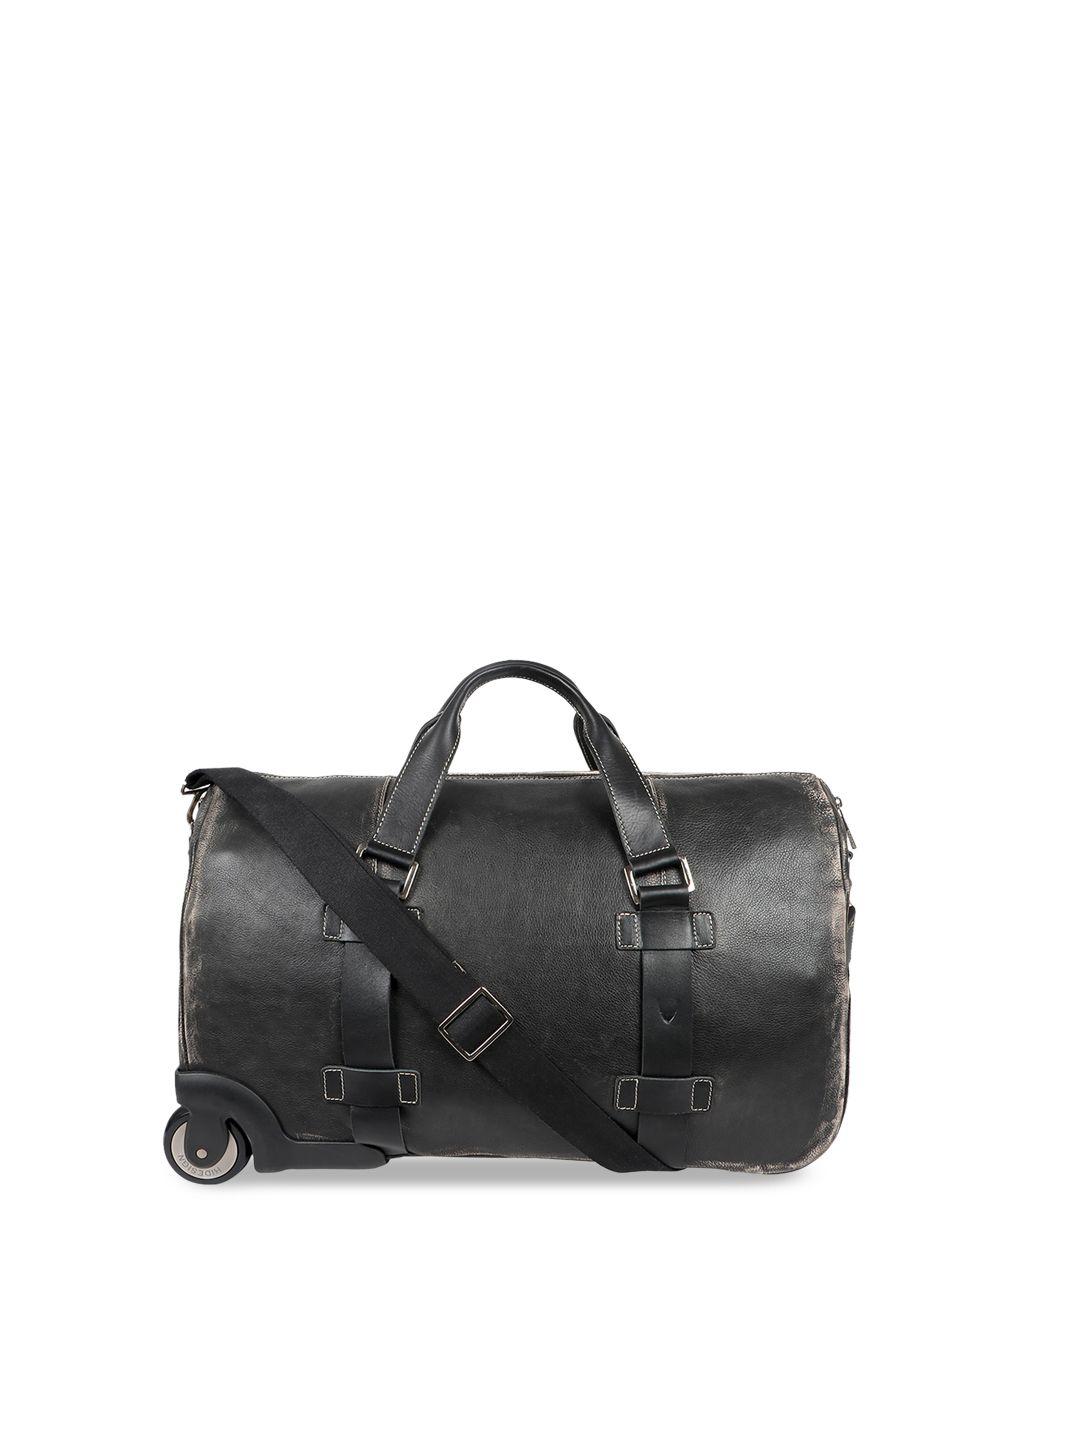 hidesign men black solid leather medium duffel bag